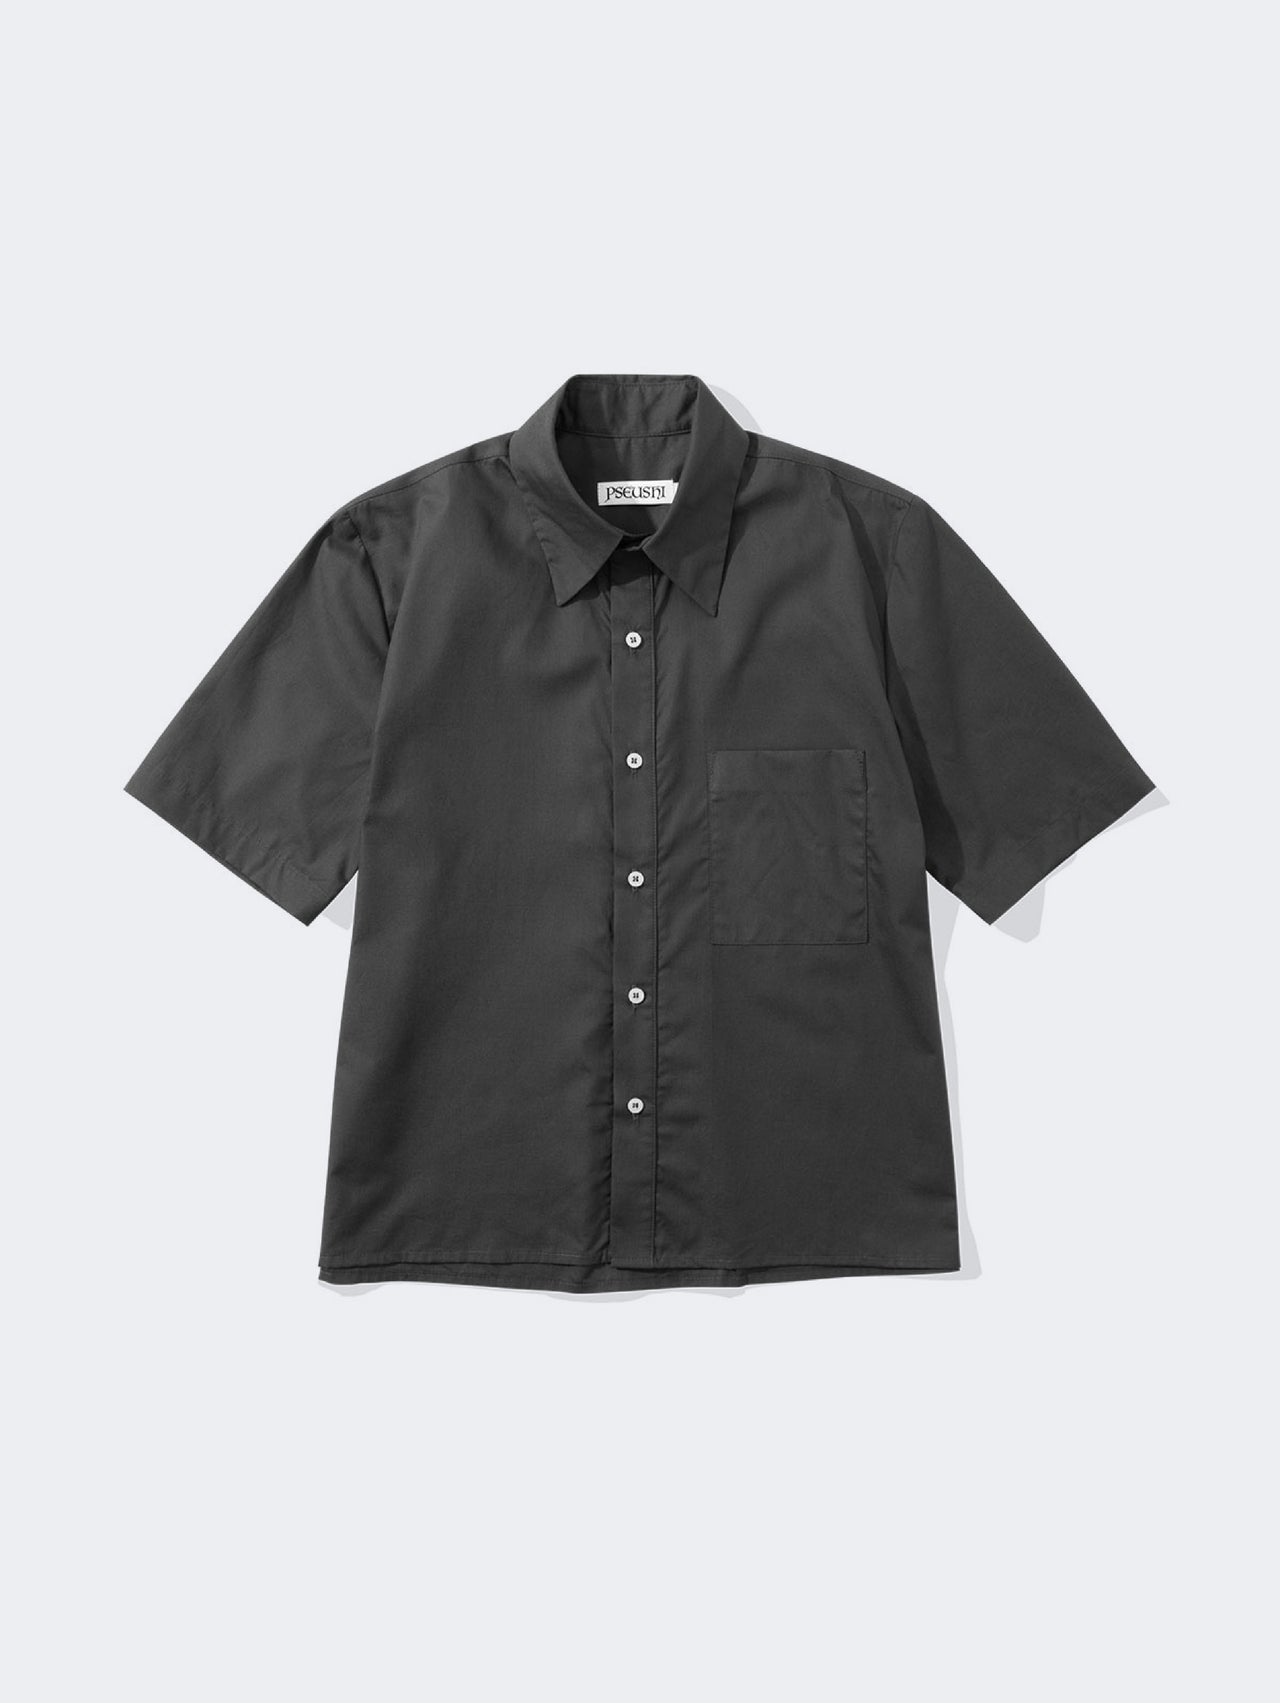 PSEUSHI Short Sleeve Shirt Charcoal